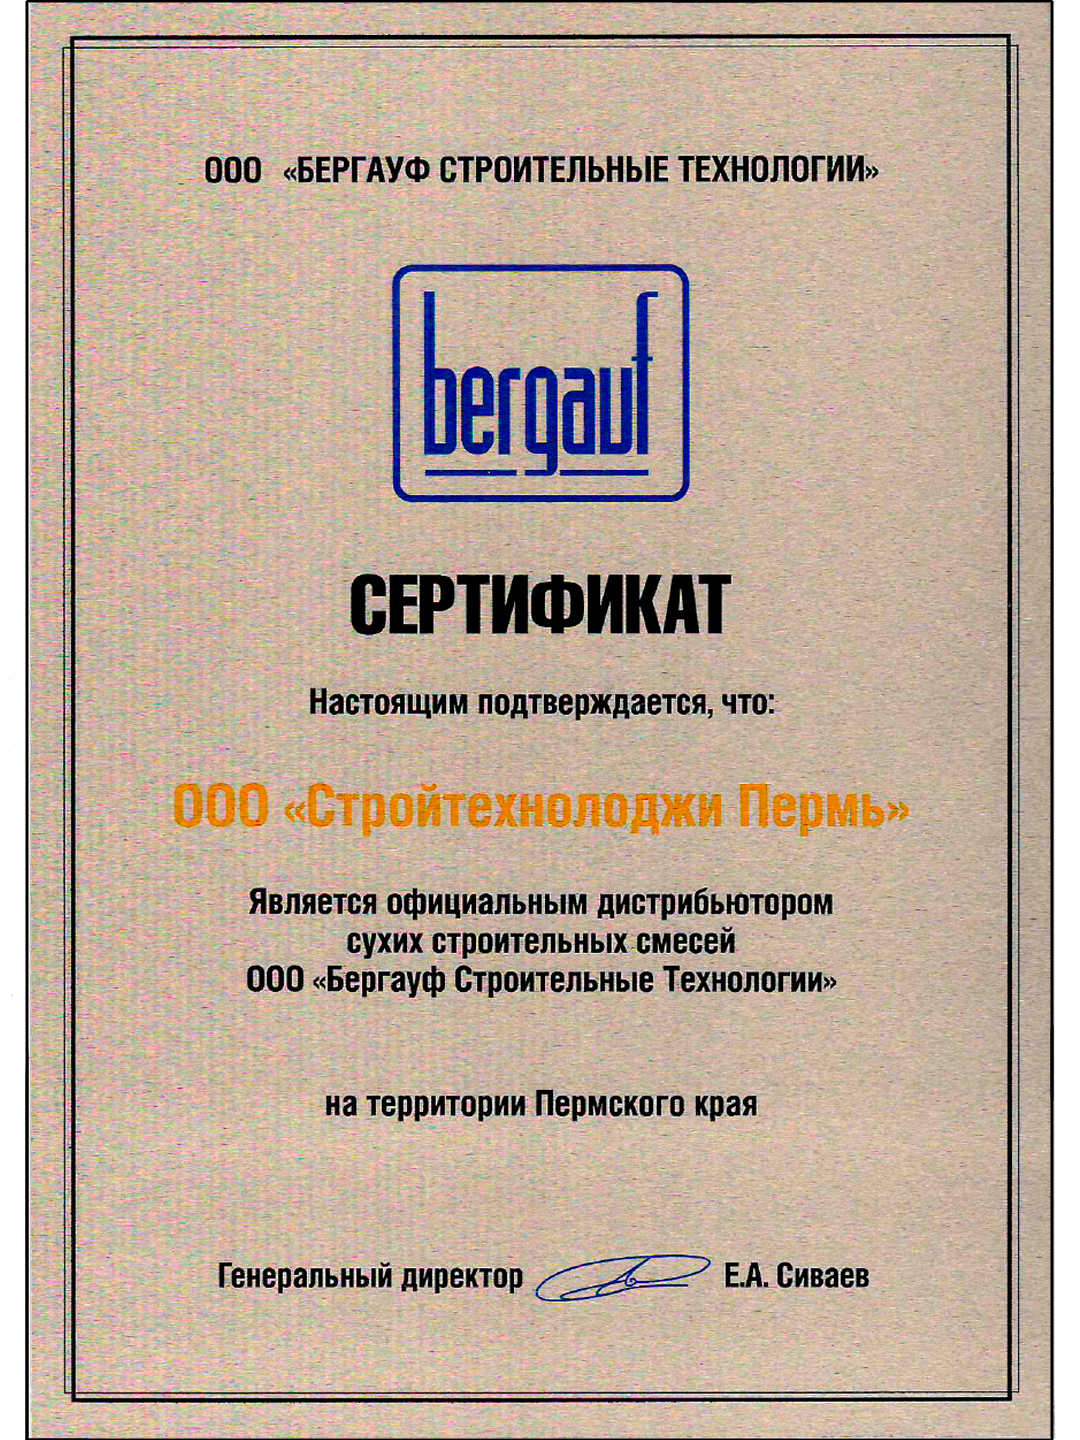 https://st-perm.ru/image/catalog/certificate/bergauf1.png